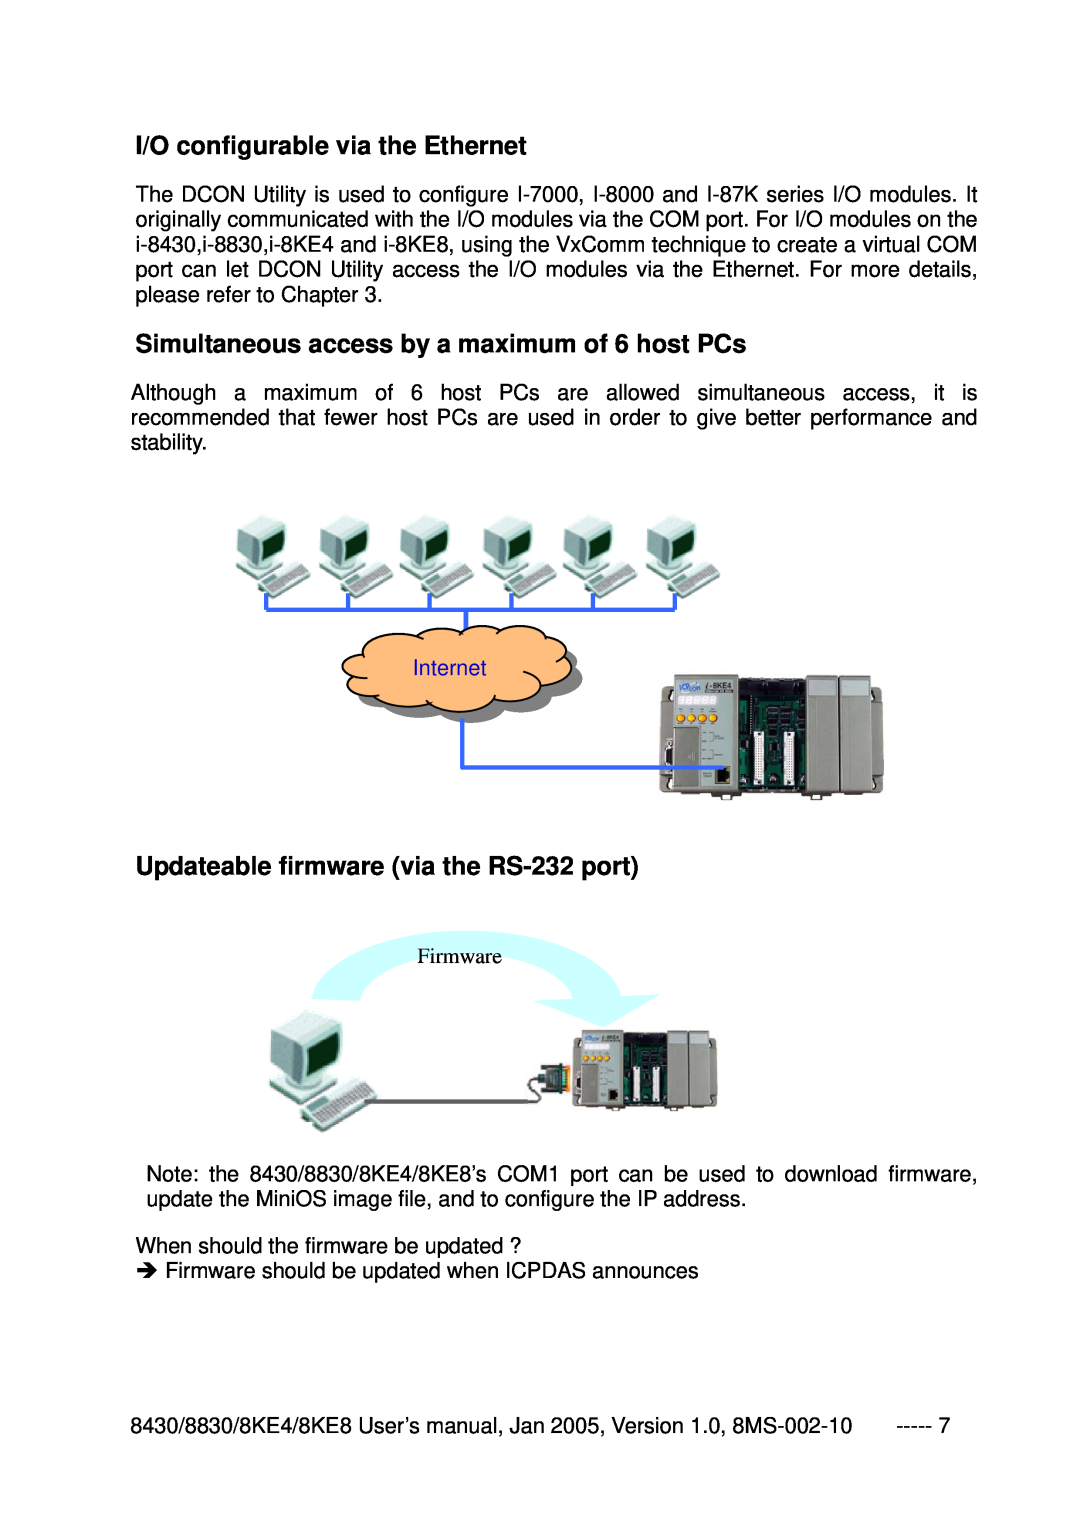 ICP DAS USA 8830, 8KE8, 8KE4 I/O configurable via the Ethernet, Simultaneous access by a maximum of 6 host PCs, Internet 